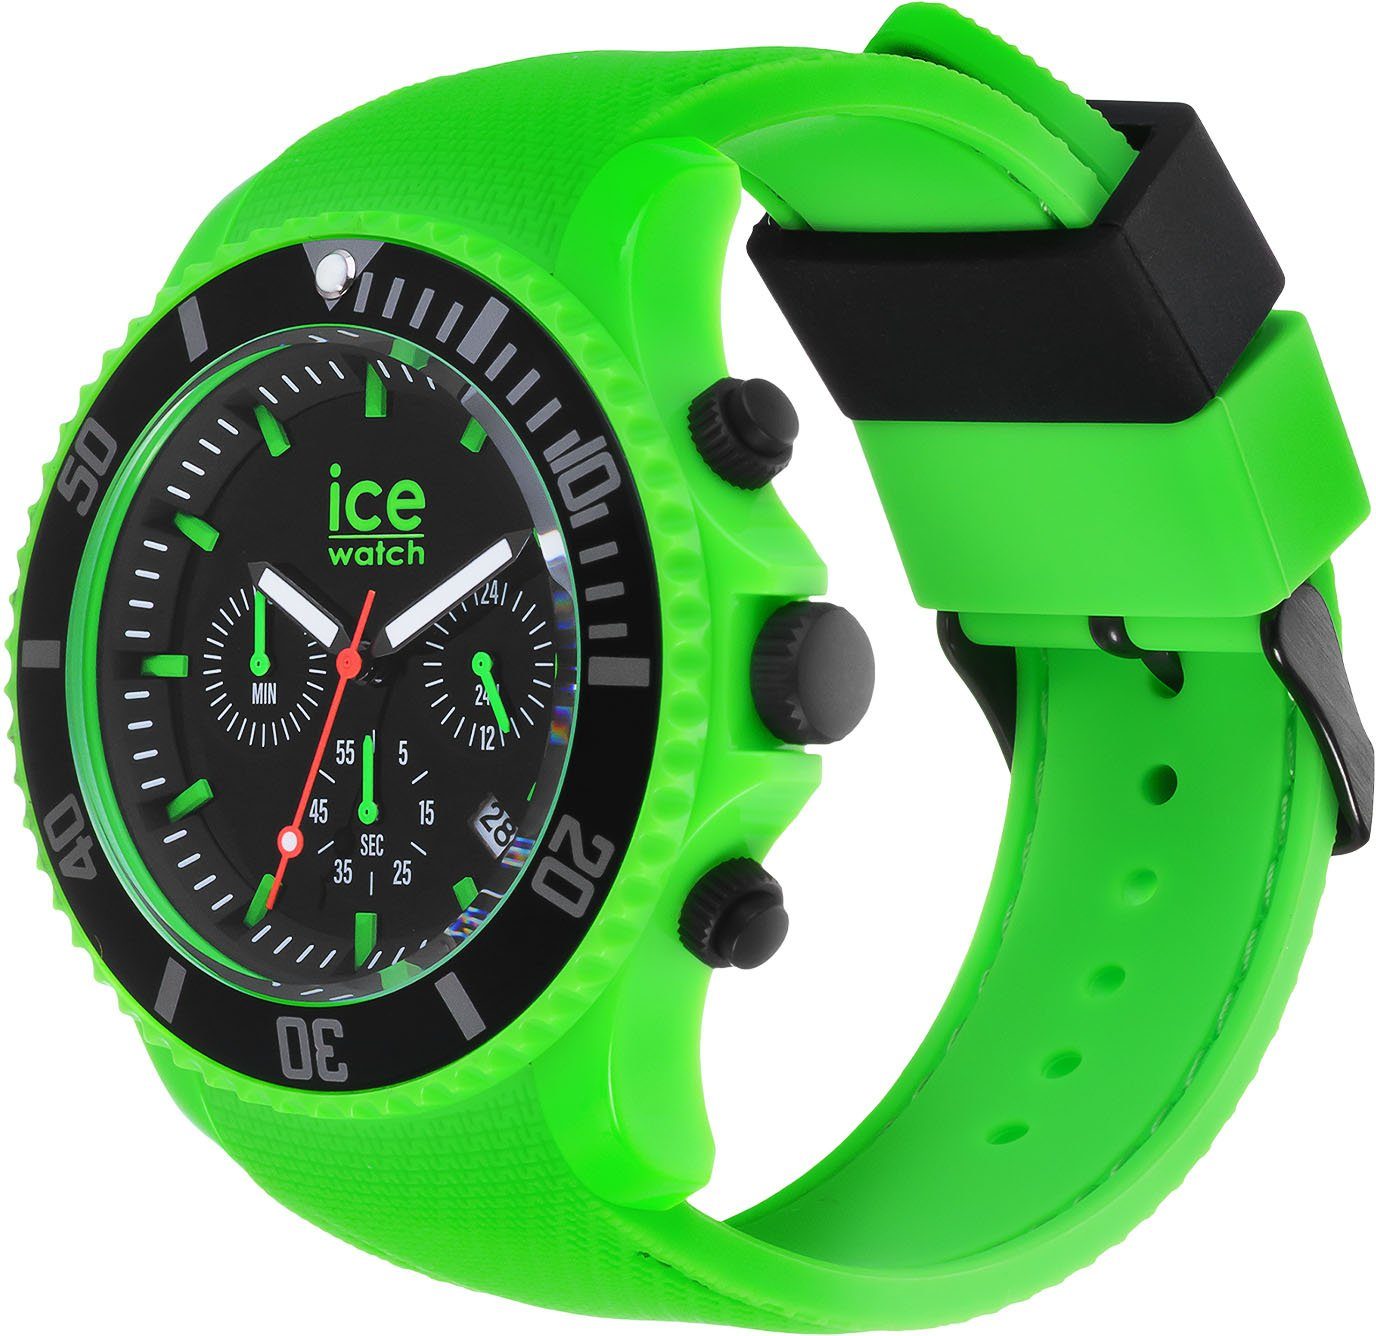 ice-watch Chronograph ICE chrono - CH, green 019839 grün Neon Large - 